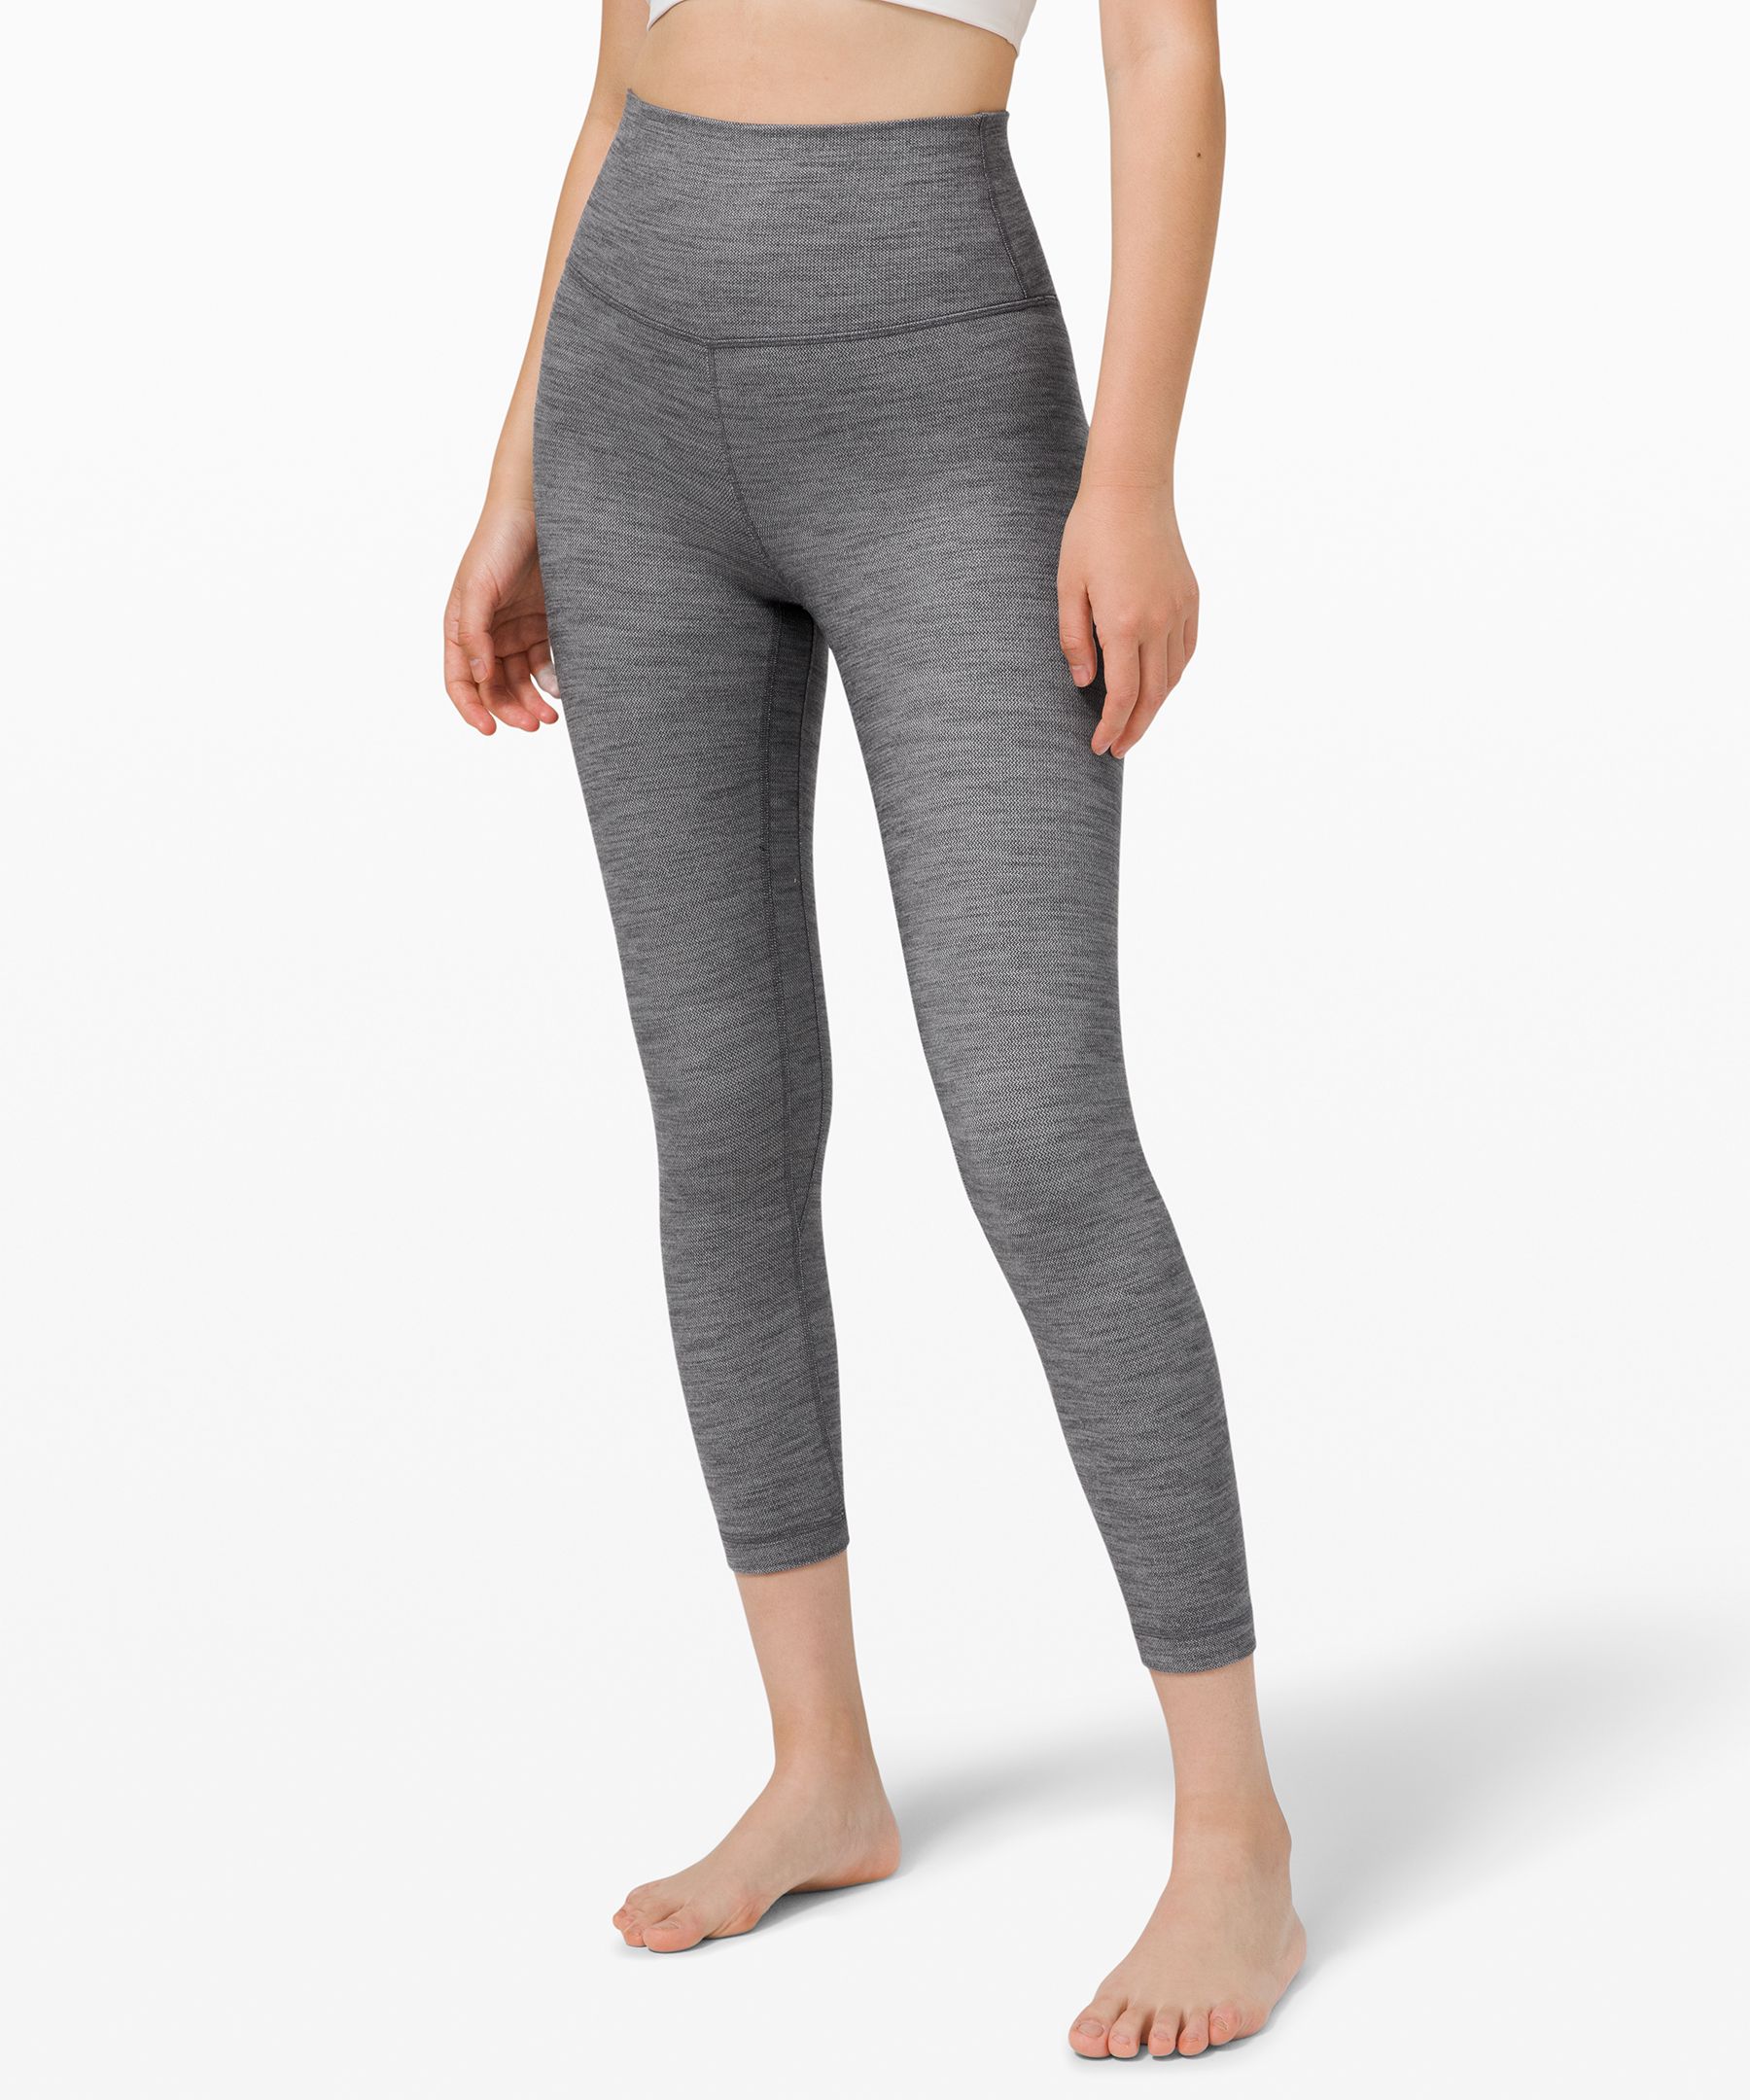 gray lulu leggings